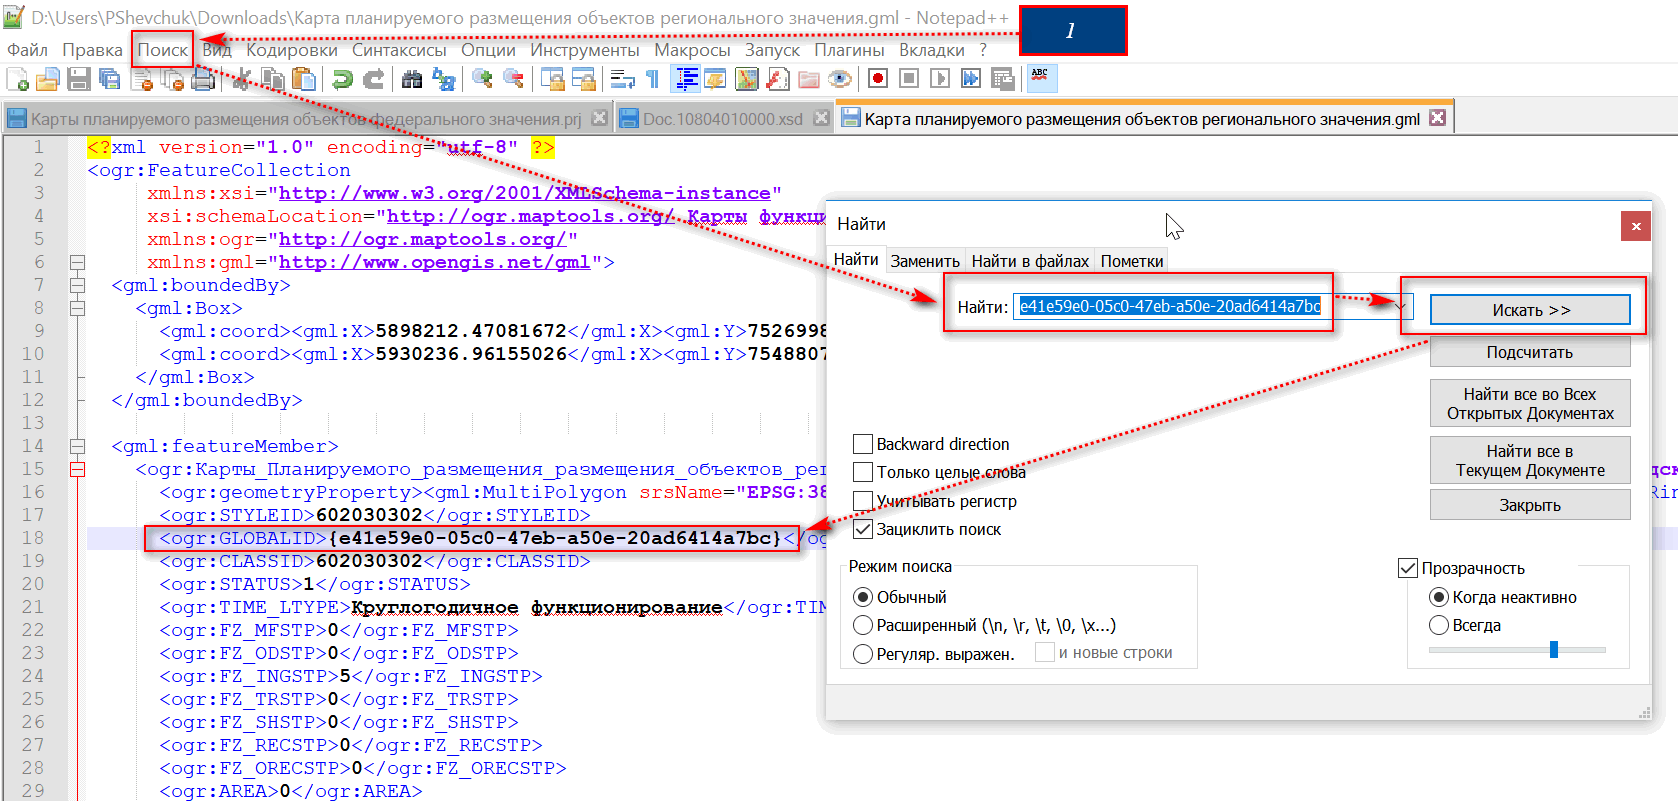 Sql insert into: примеры вставки строк в таблицу бд mysql